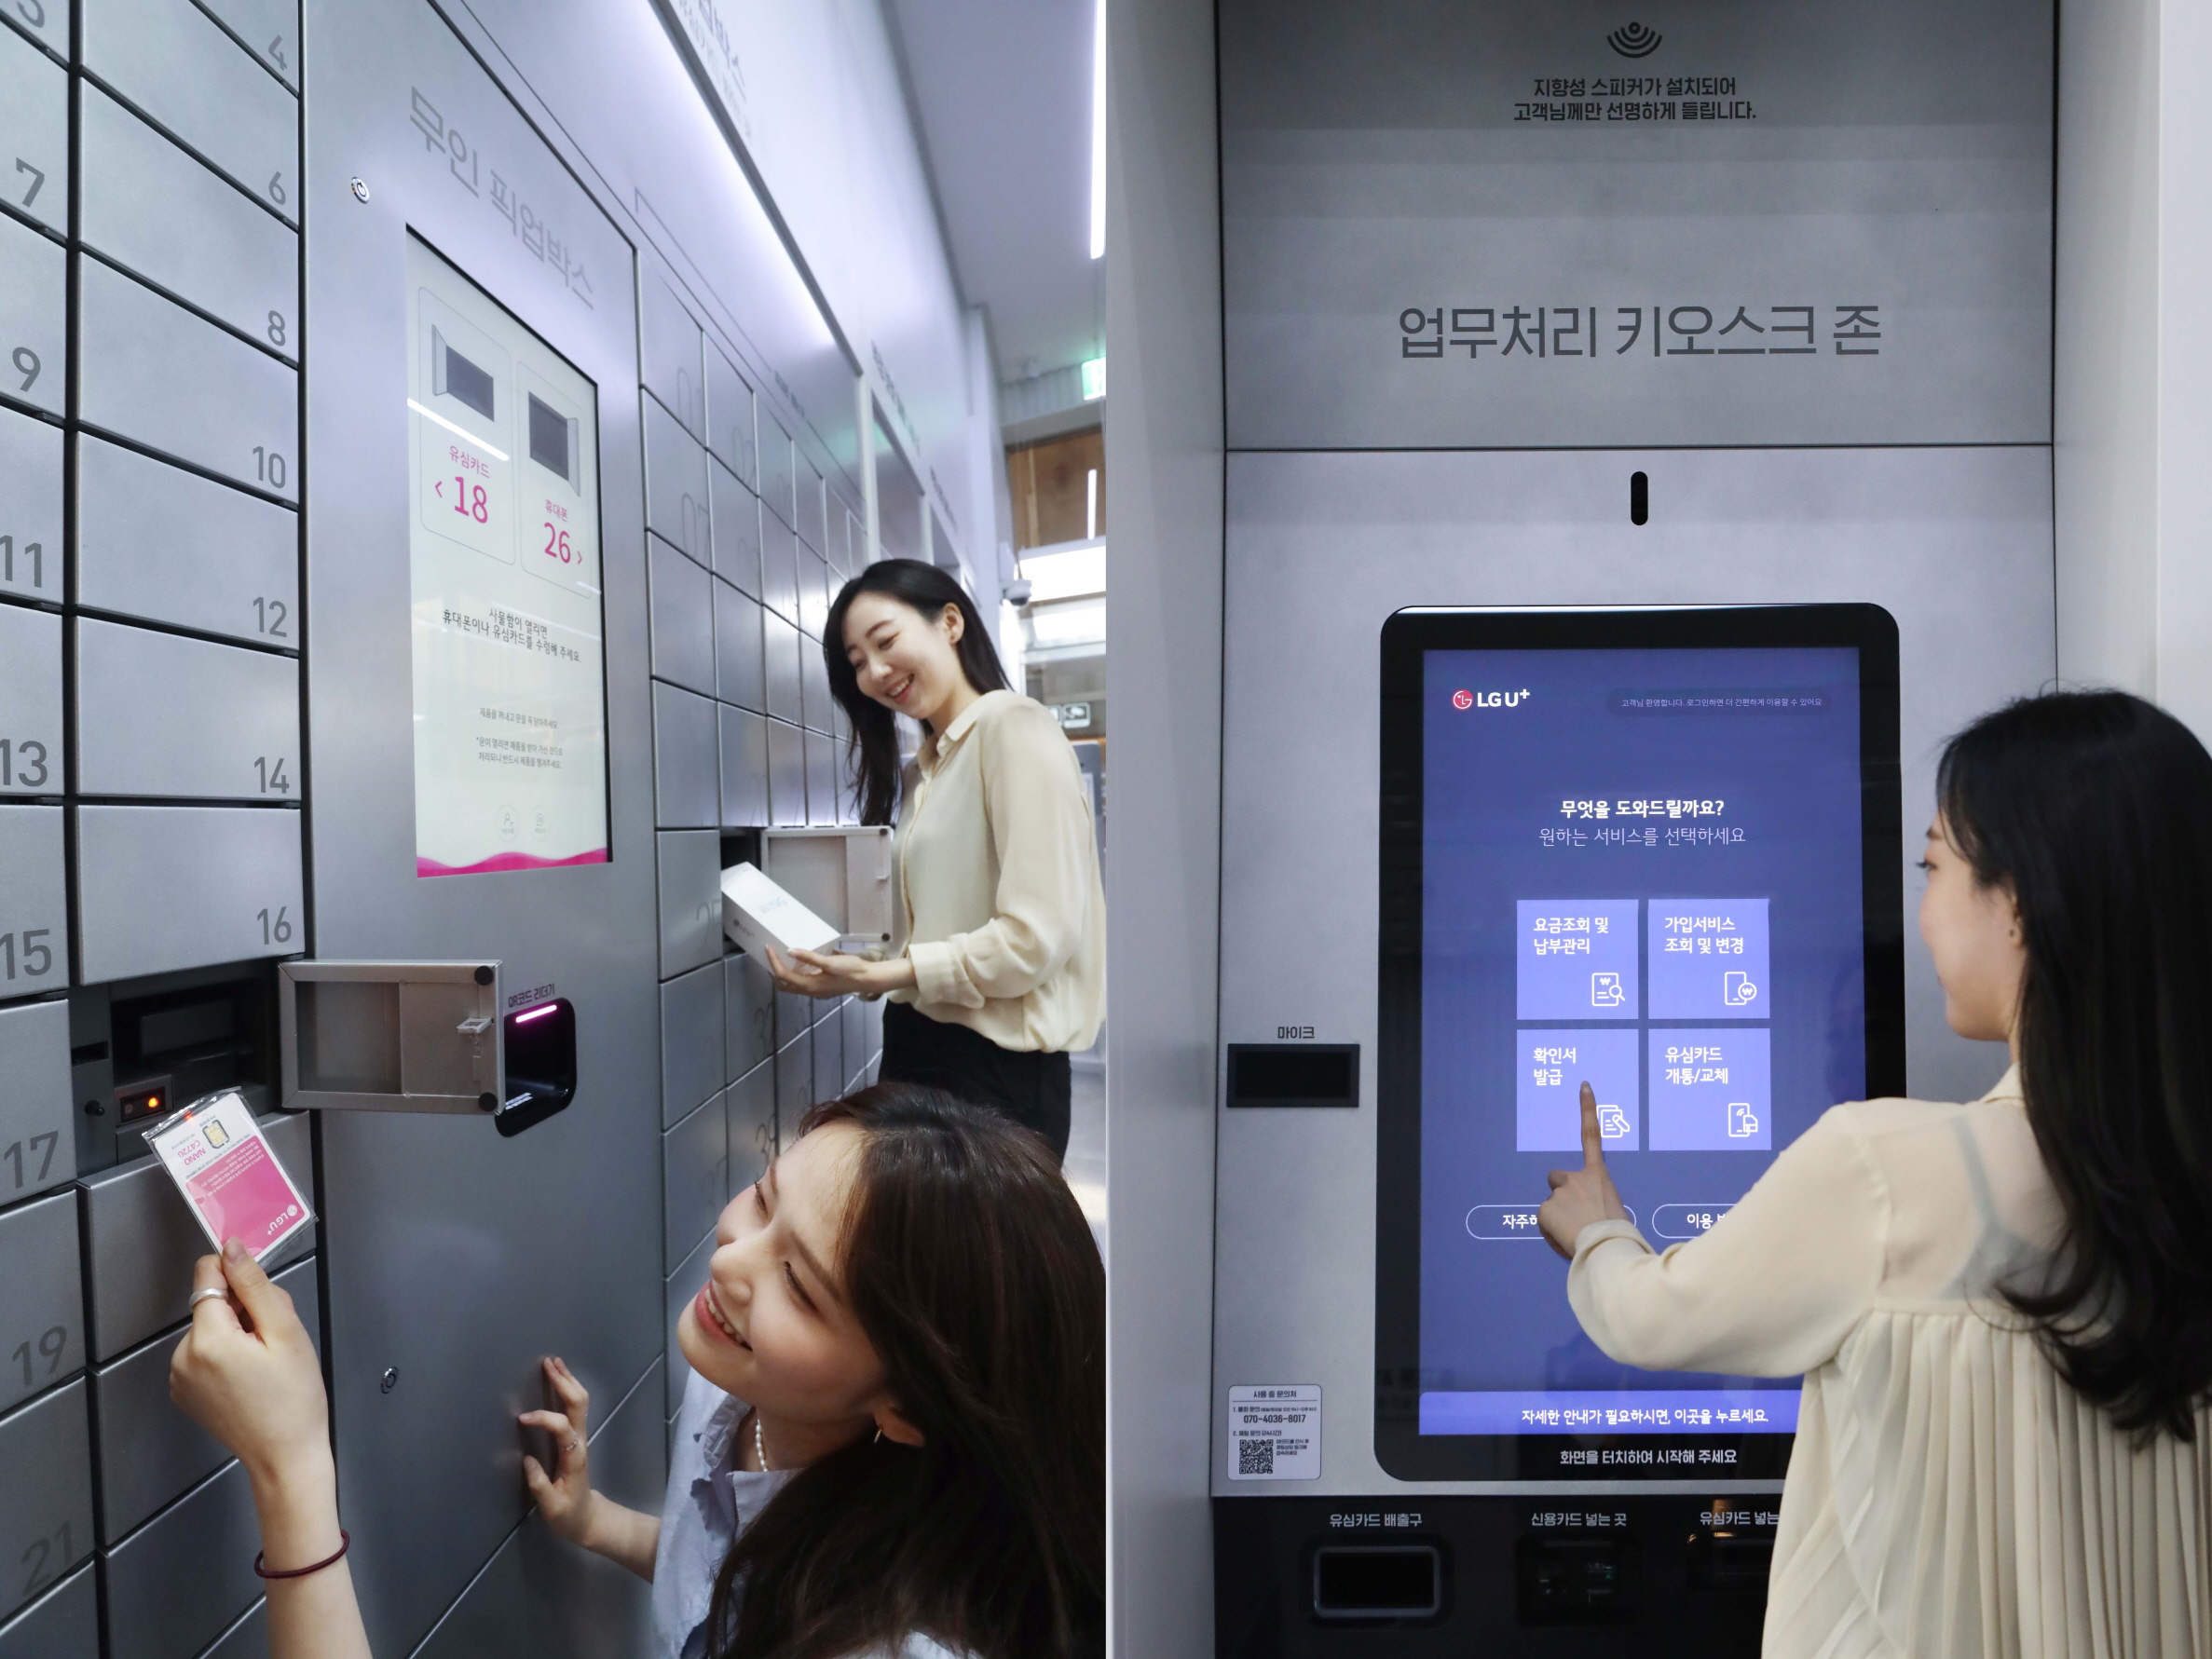 ▲  LG유플러스 모델들이 서울 종로구의 'U+ 언택트스토어'에서 구매한 유심과 스마트폰을 받는 모습(왼쪽)과 키오스크를 이용하는 모습. (사진=LG유플러스)